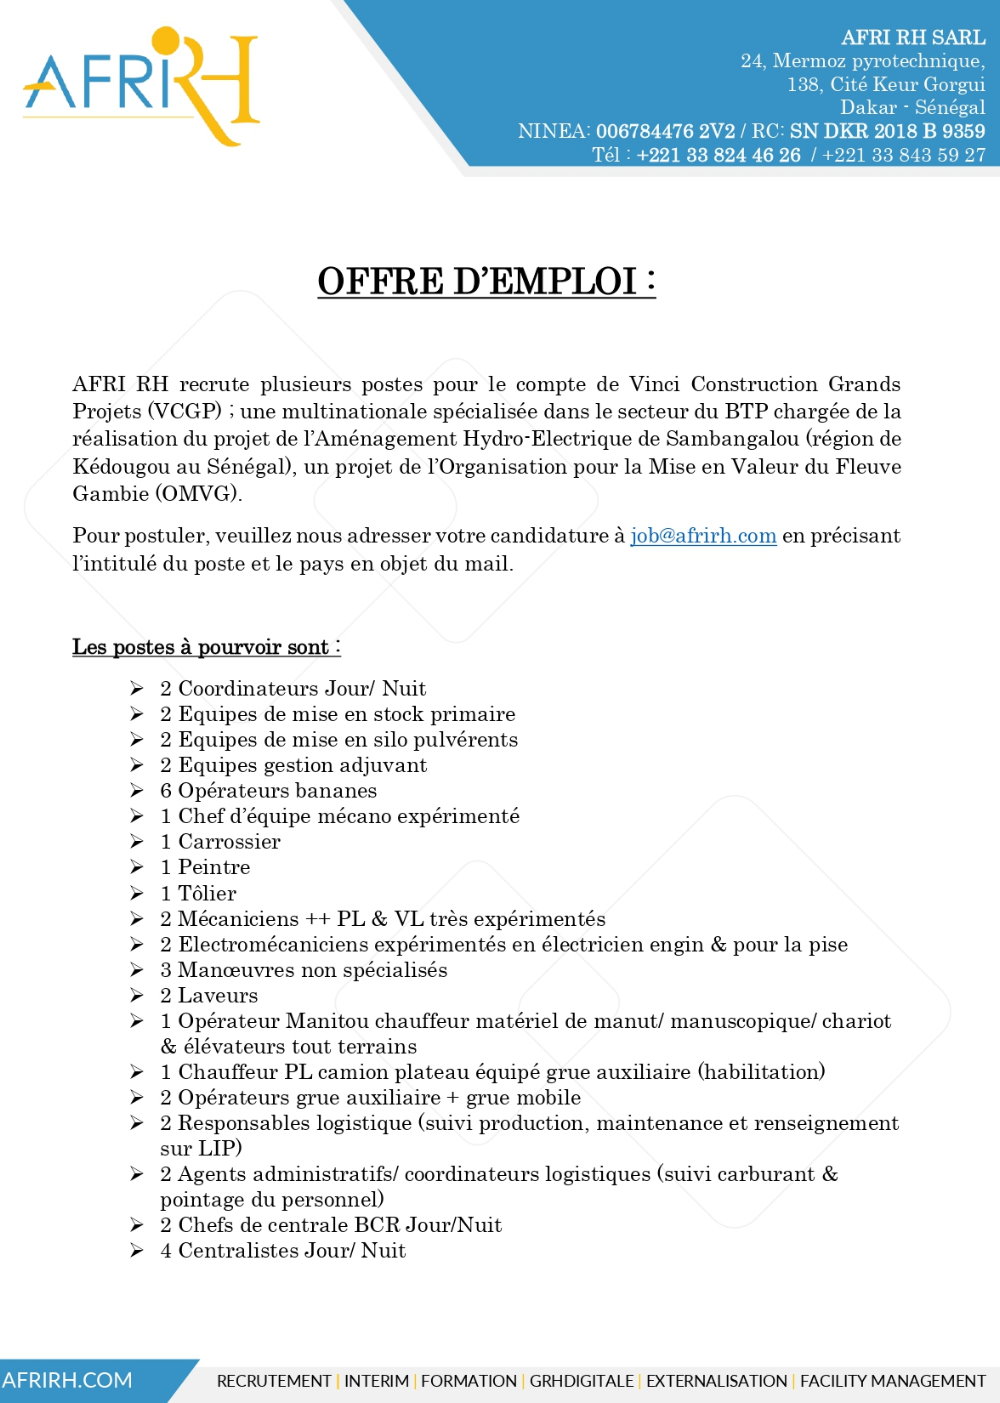 Publication offre demploi v2 GUINEE AFRI RH page 0001